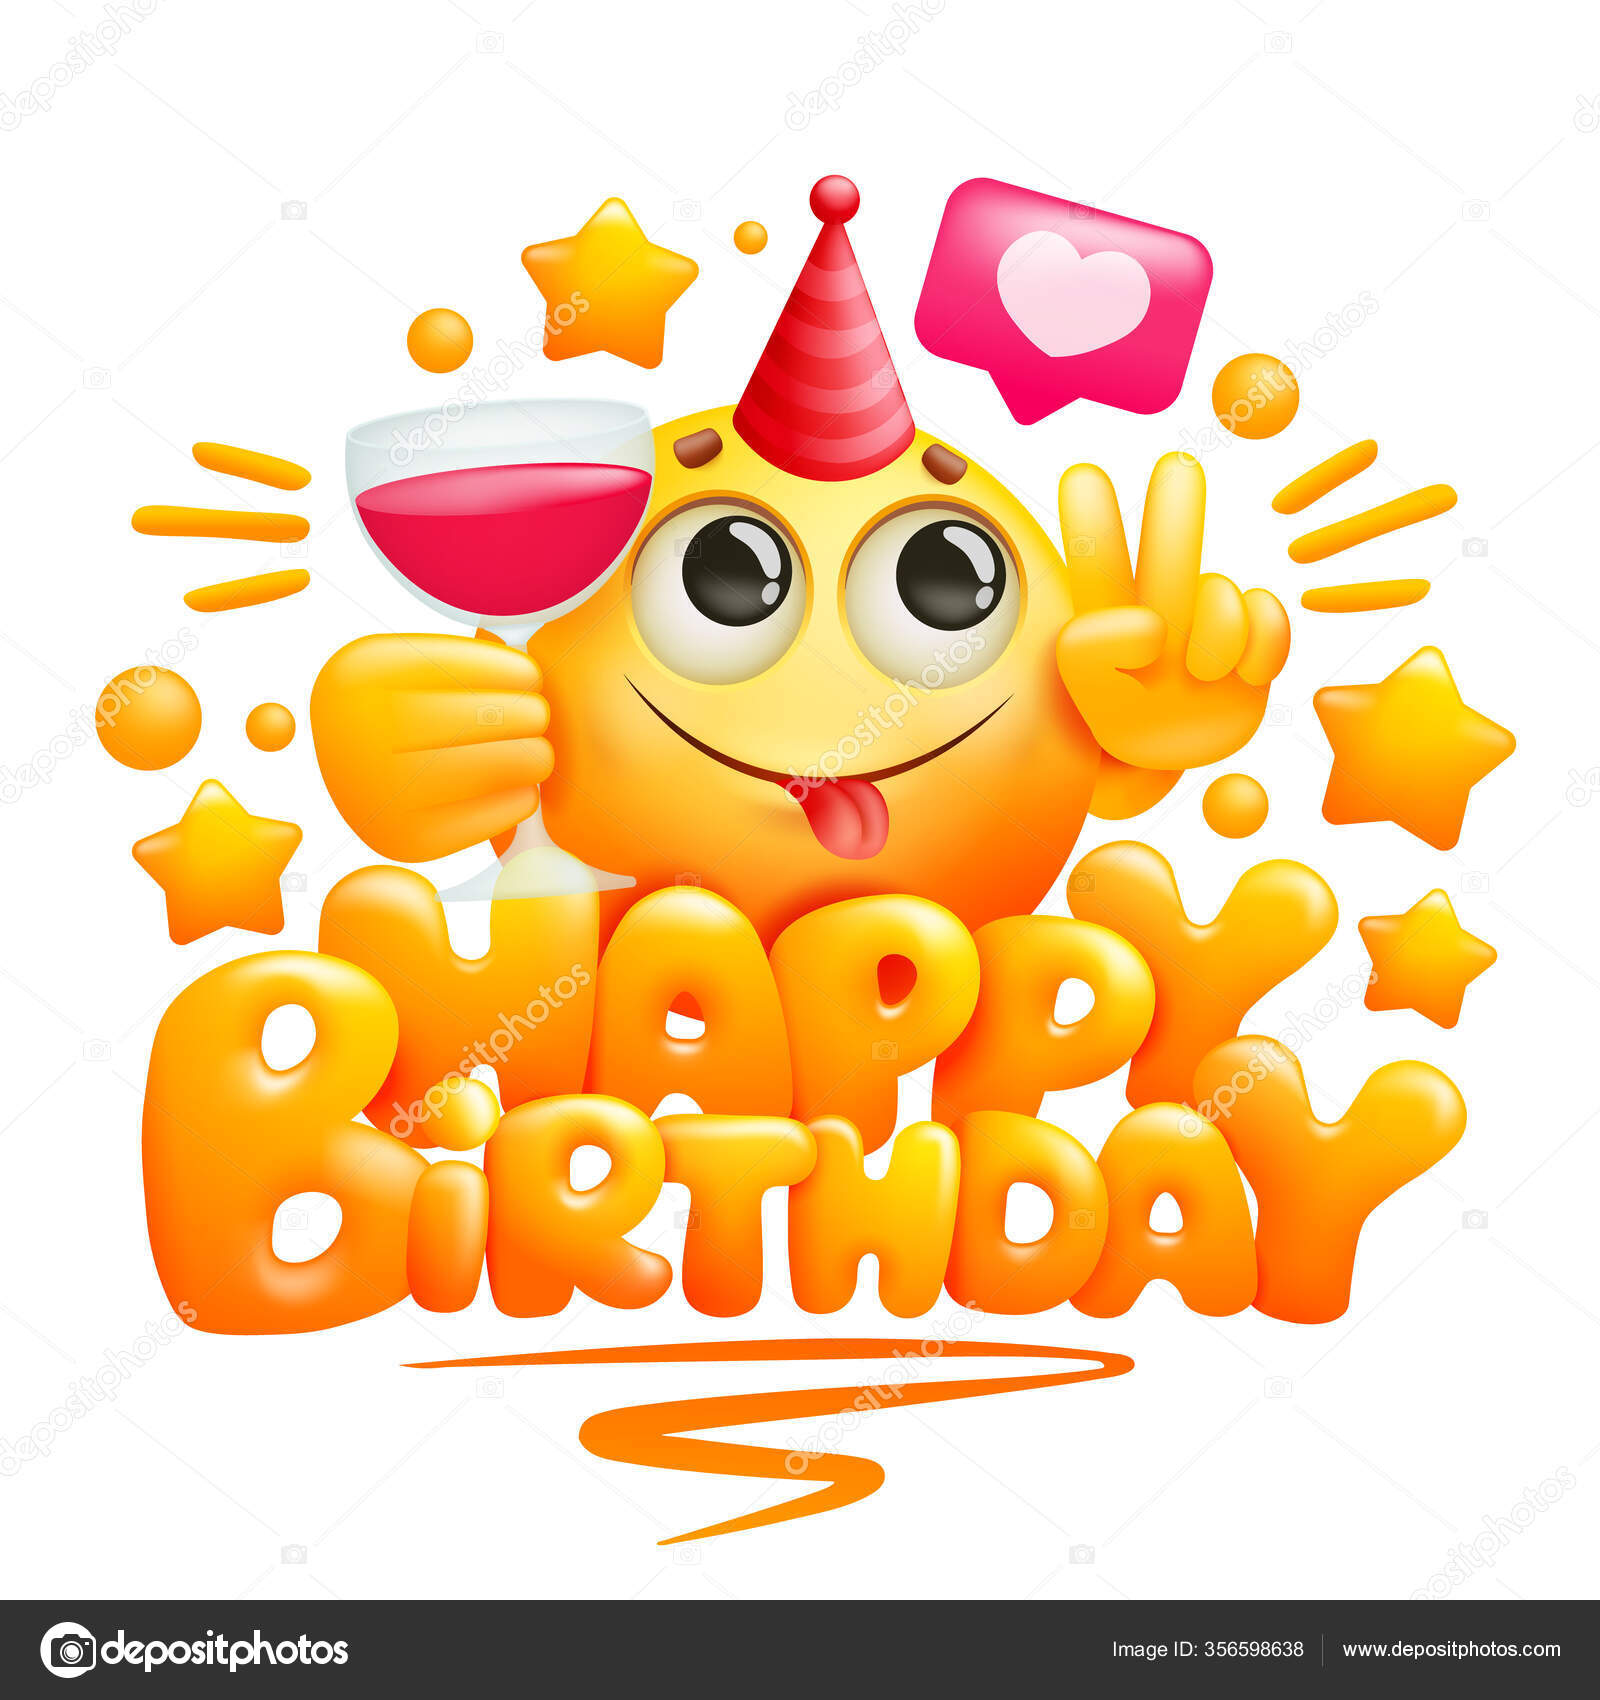 Happy Birthday Greeting Card Template Cartoon Style Yellow Emoji Character Vector Image By C Nektoetkin Vector Stock